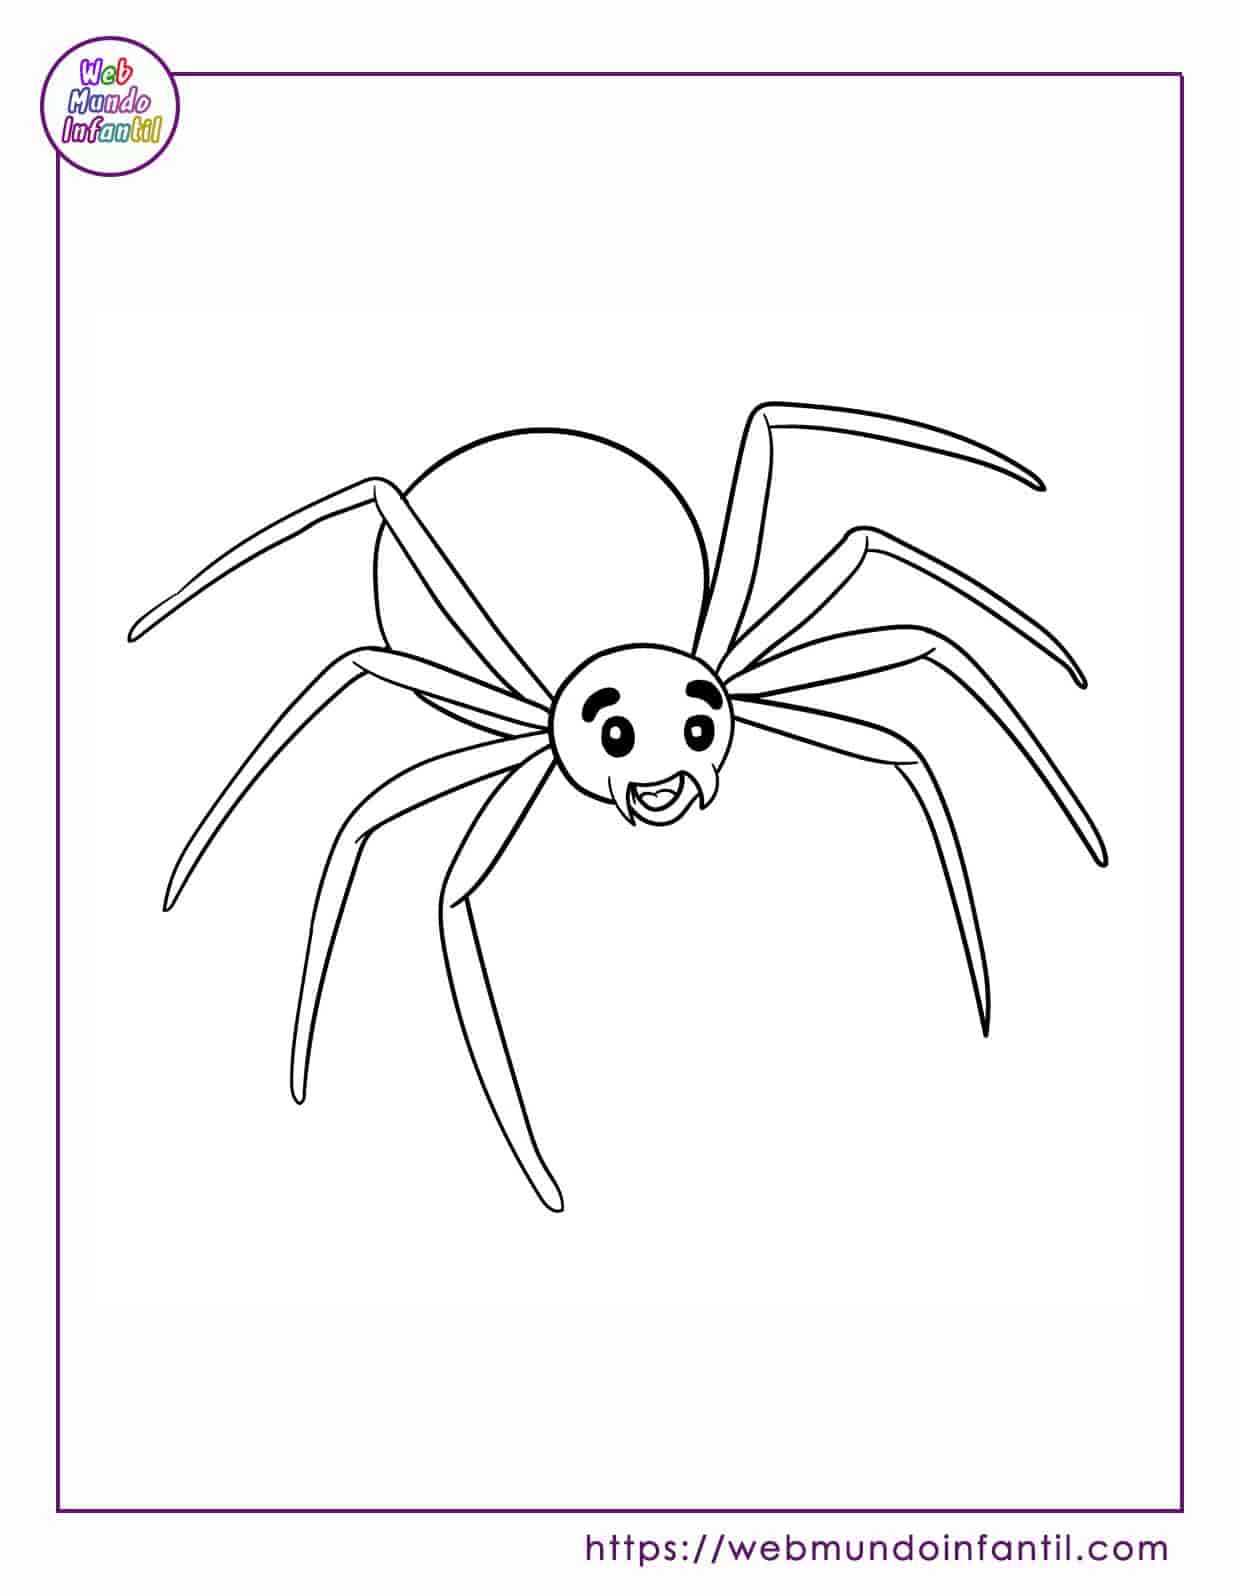 Dibujos de Arañas para colorear e imprimir gratis